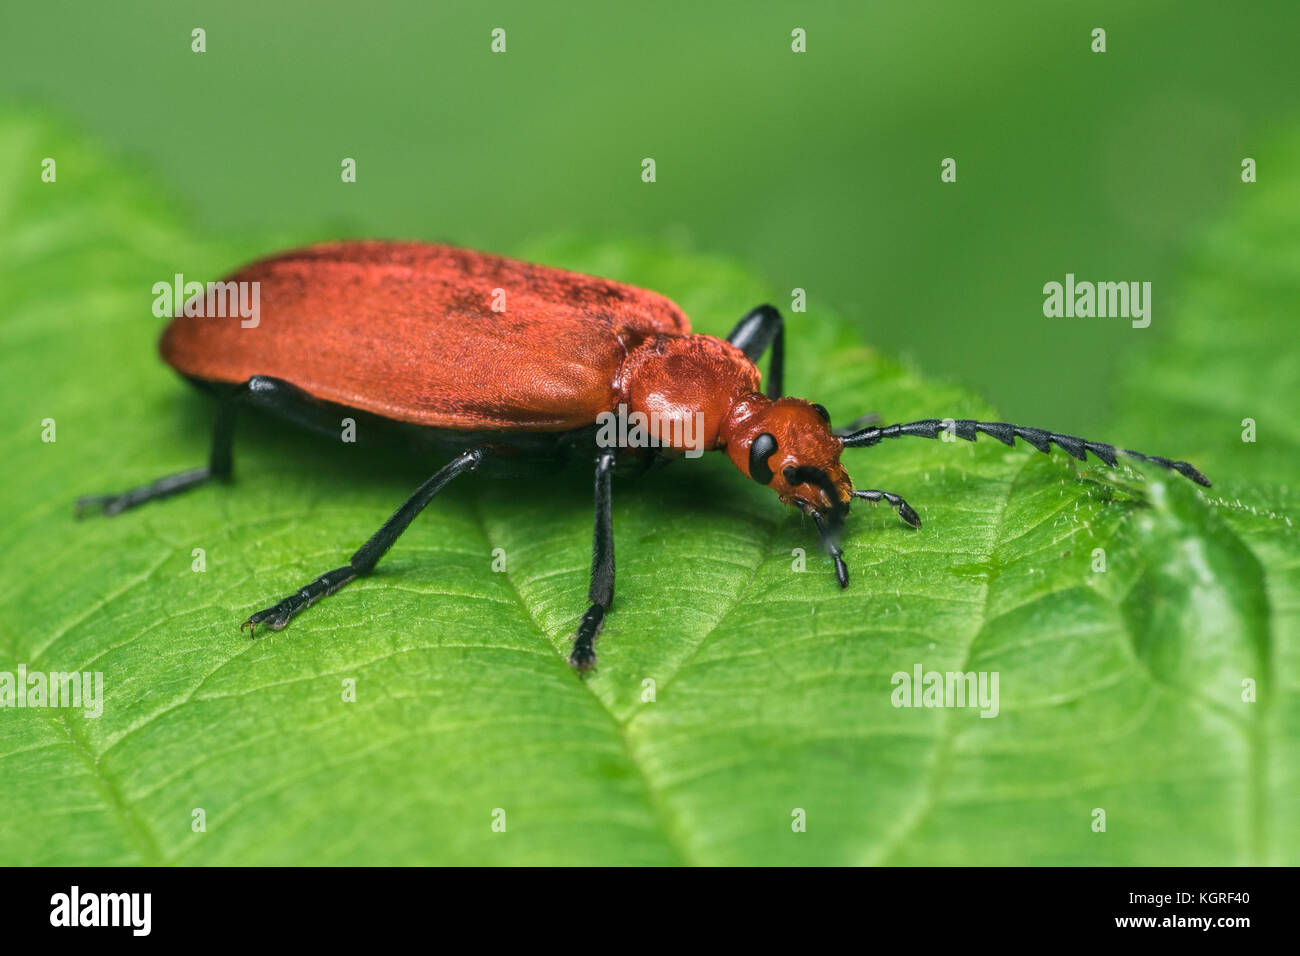 Rothaarige Kardinal Käfer (Pyrochroa serraticornis) ruht auf dornbusch Blatt. Tipperary, Irland Stockfoto